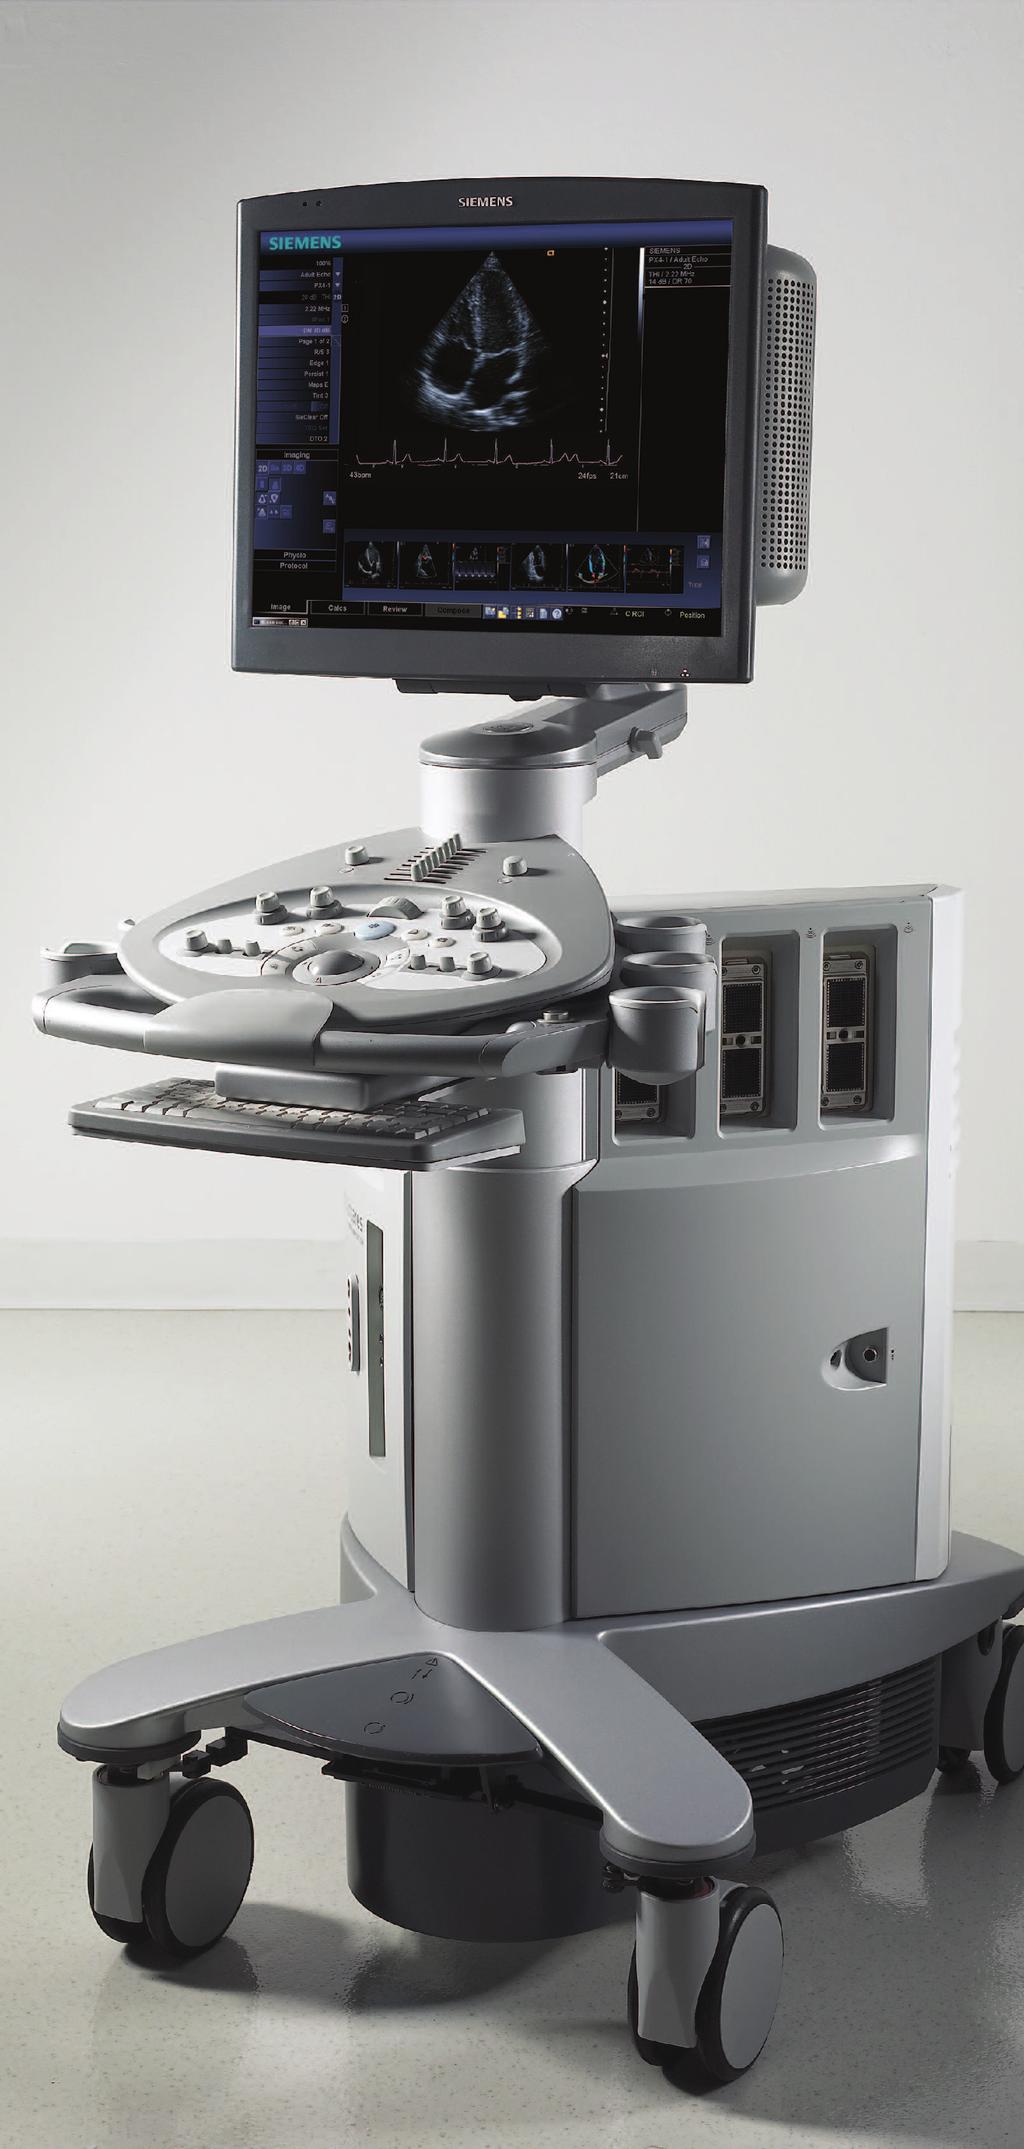 ACUSON Antares Ultrasound System